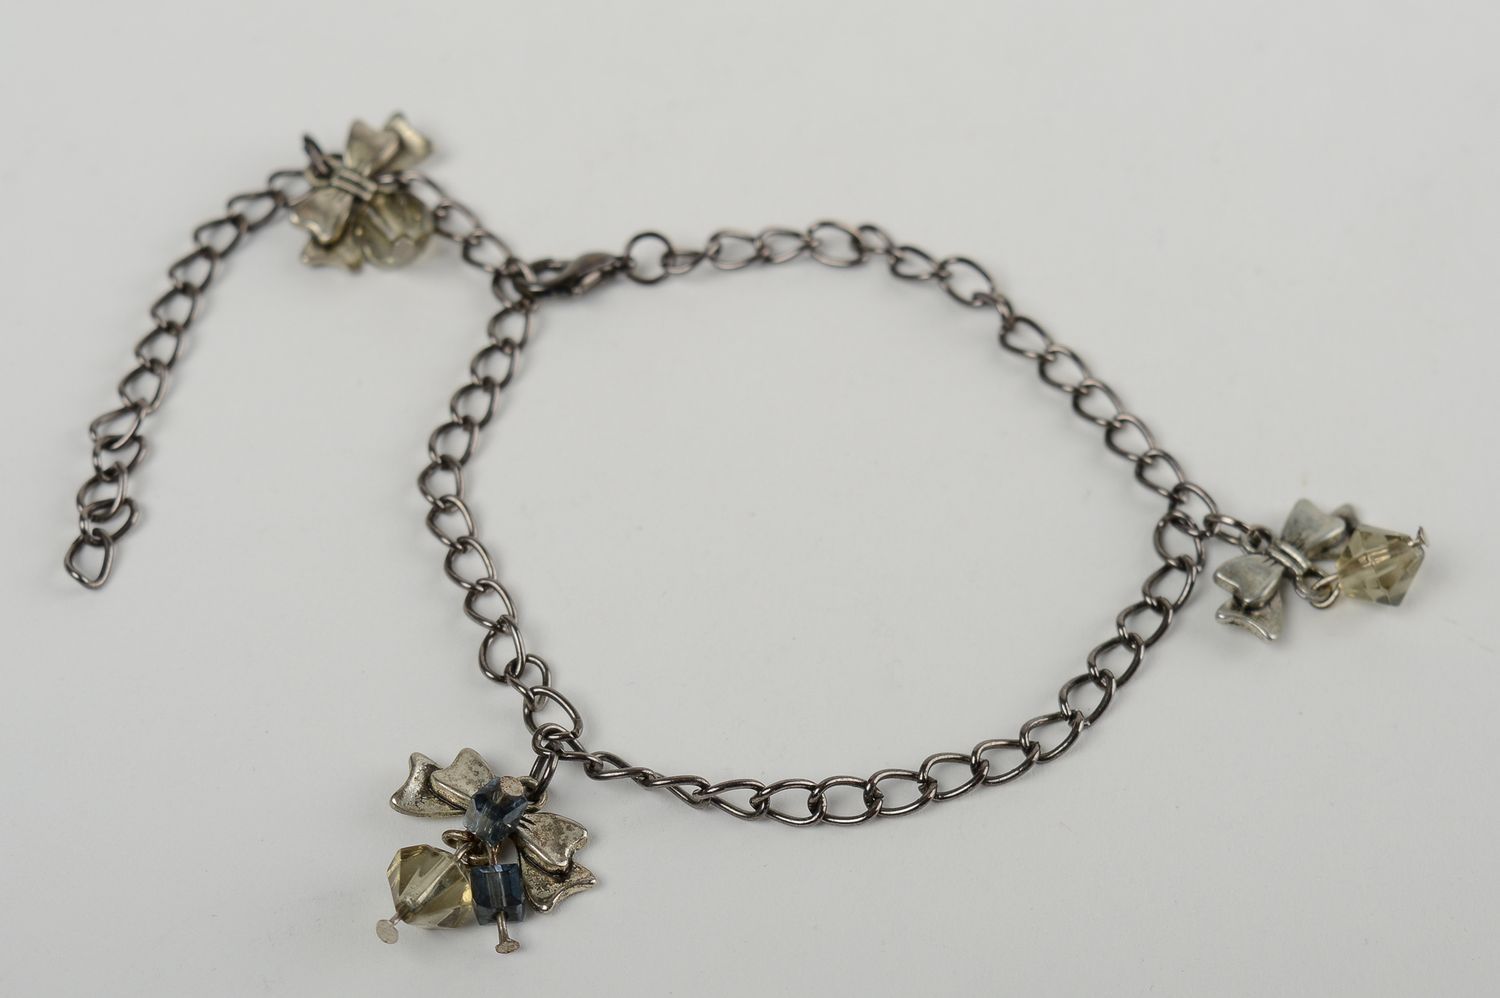 Unusual handmade metal bracelet chain bracelet with charms fashion trends photo 1